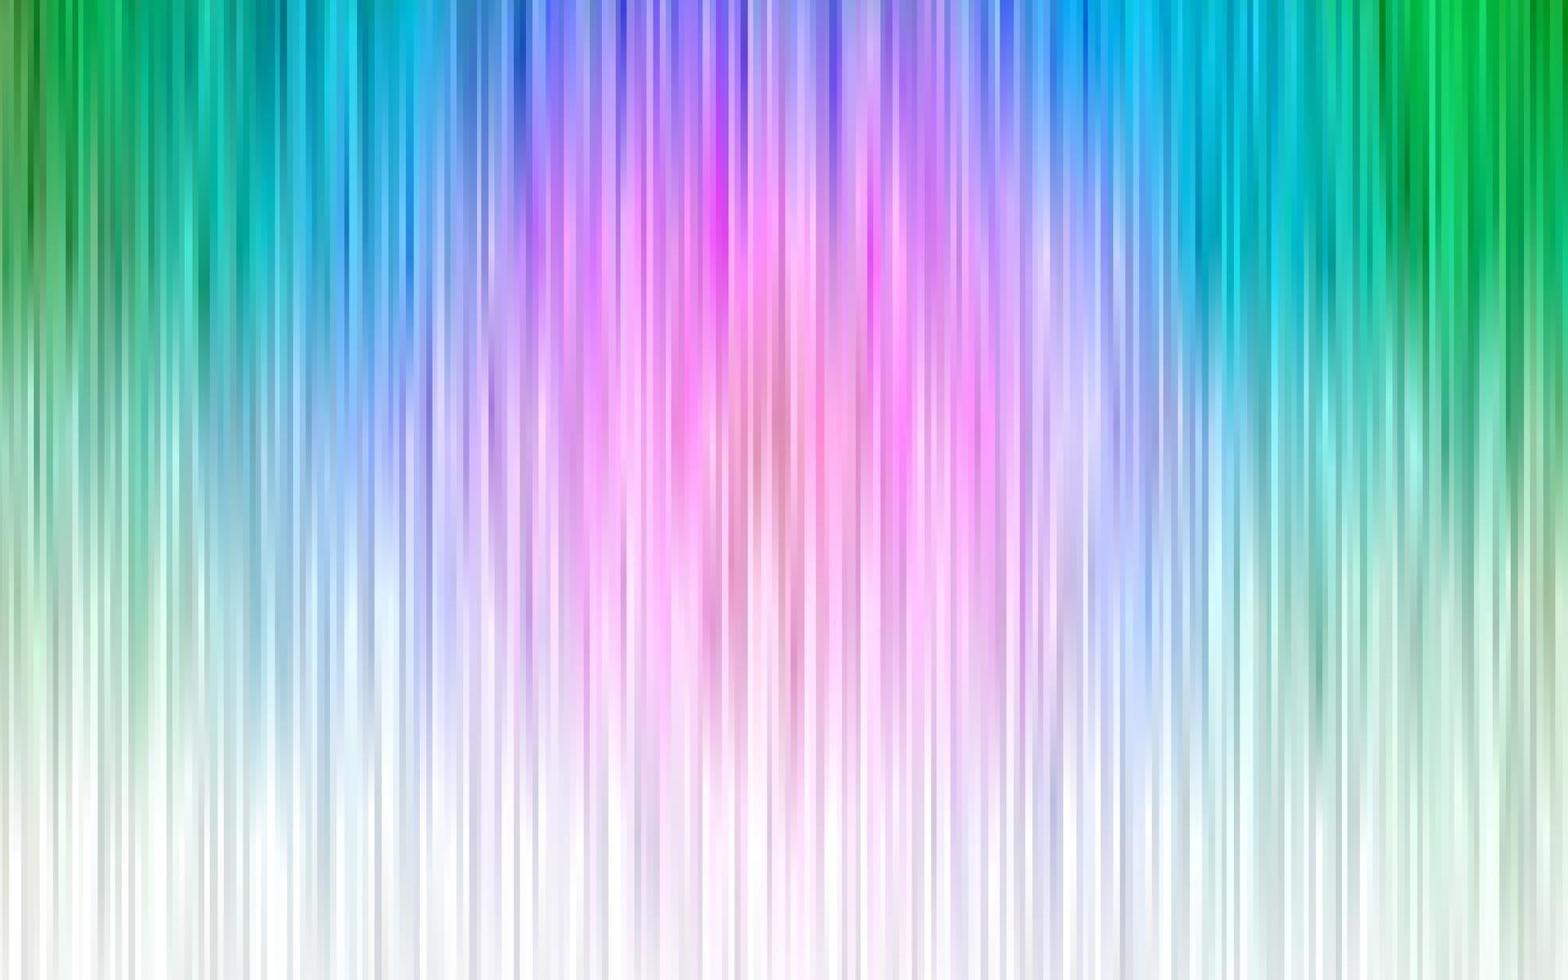 helles mehrfarbiges, regenbogenförmiges Vektorlayout mit flachen Linien. vektor